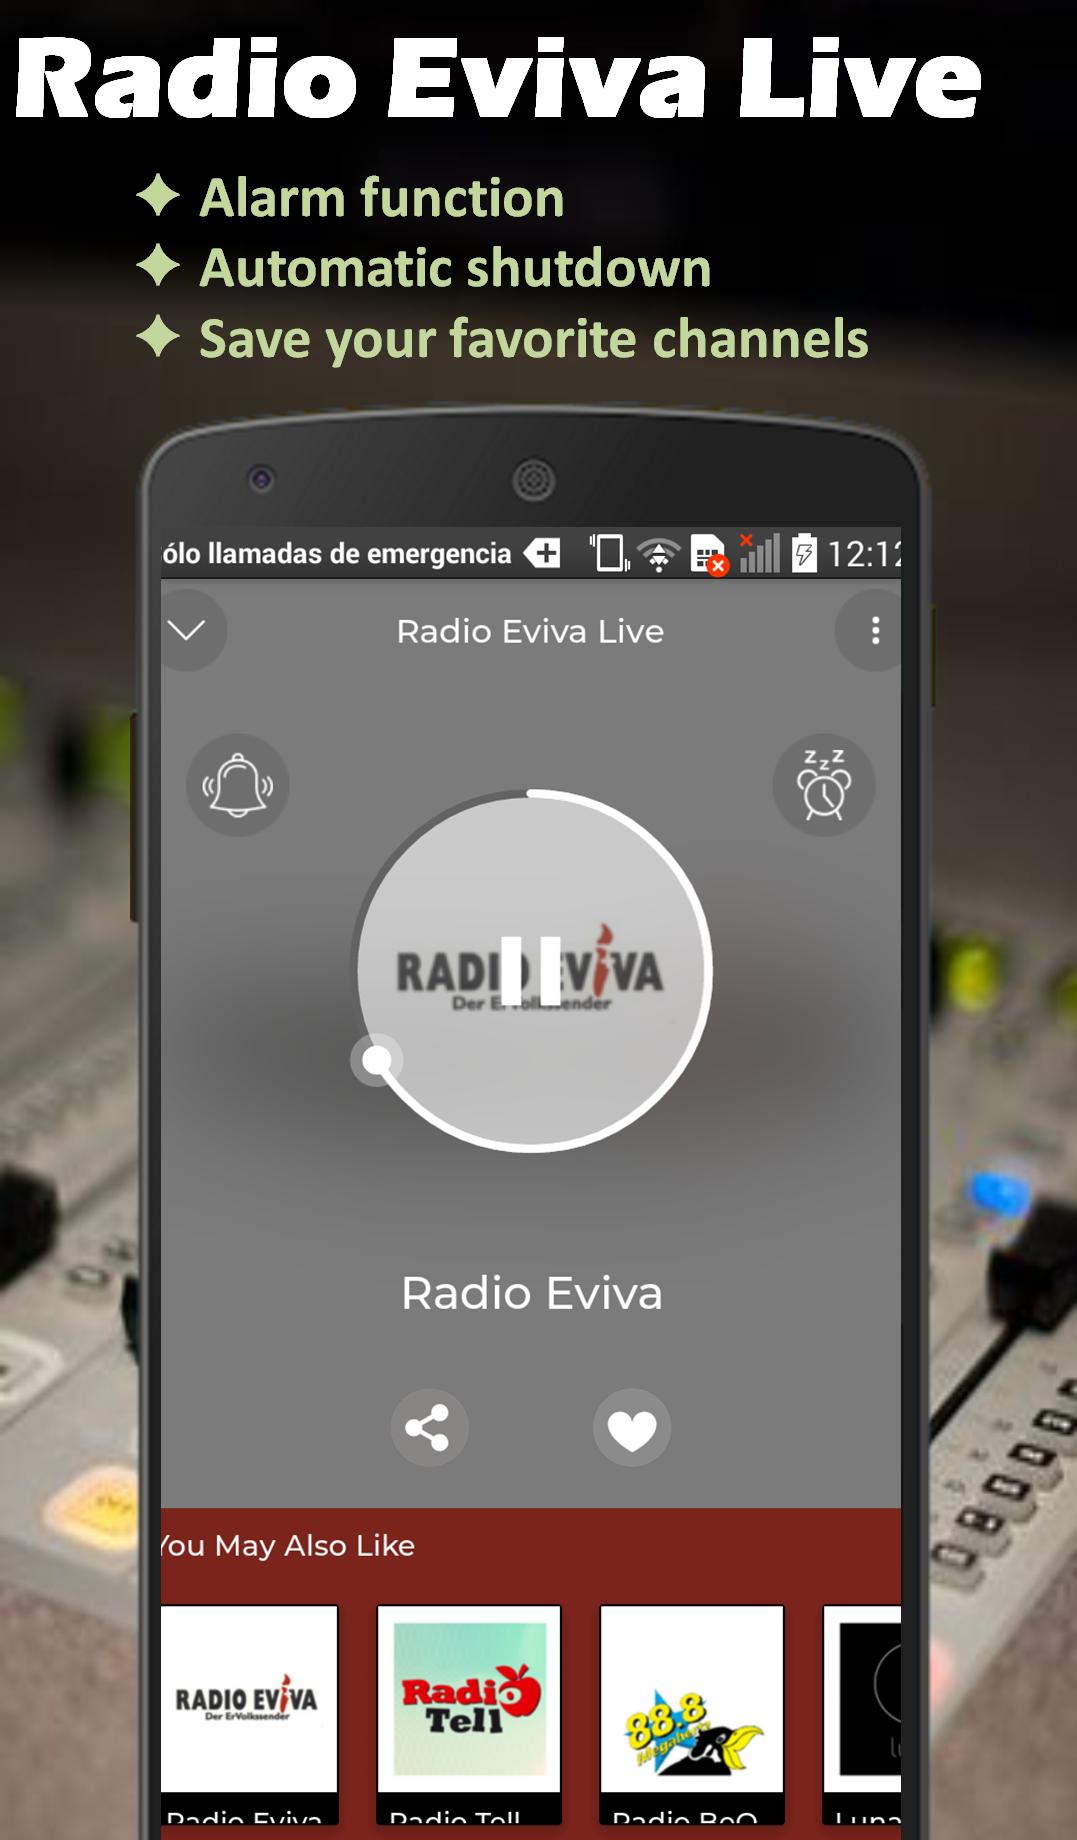 Radio Eviva Live Schweiz Radiosender Online for Android - APK Download